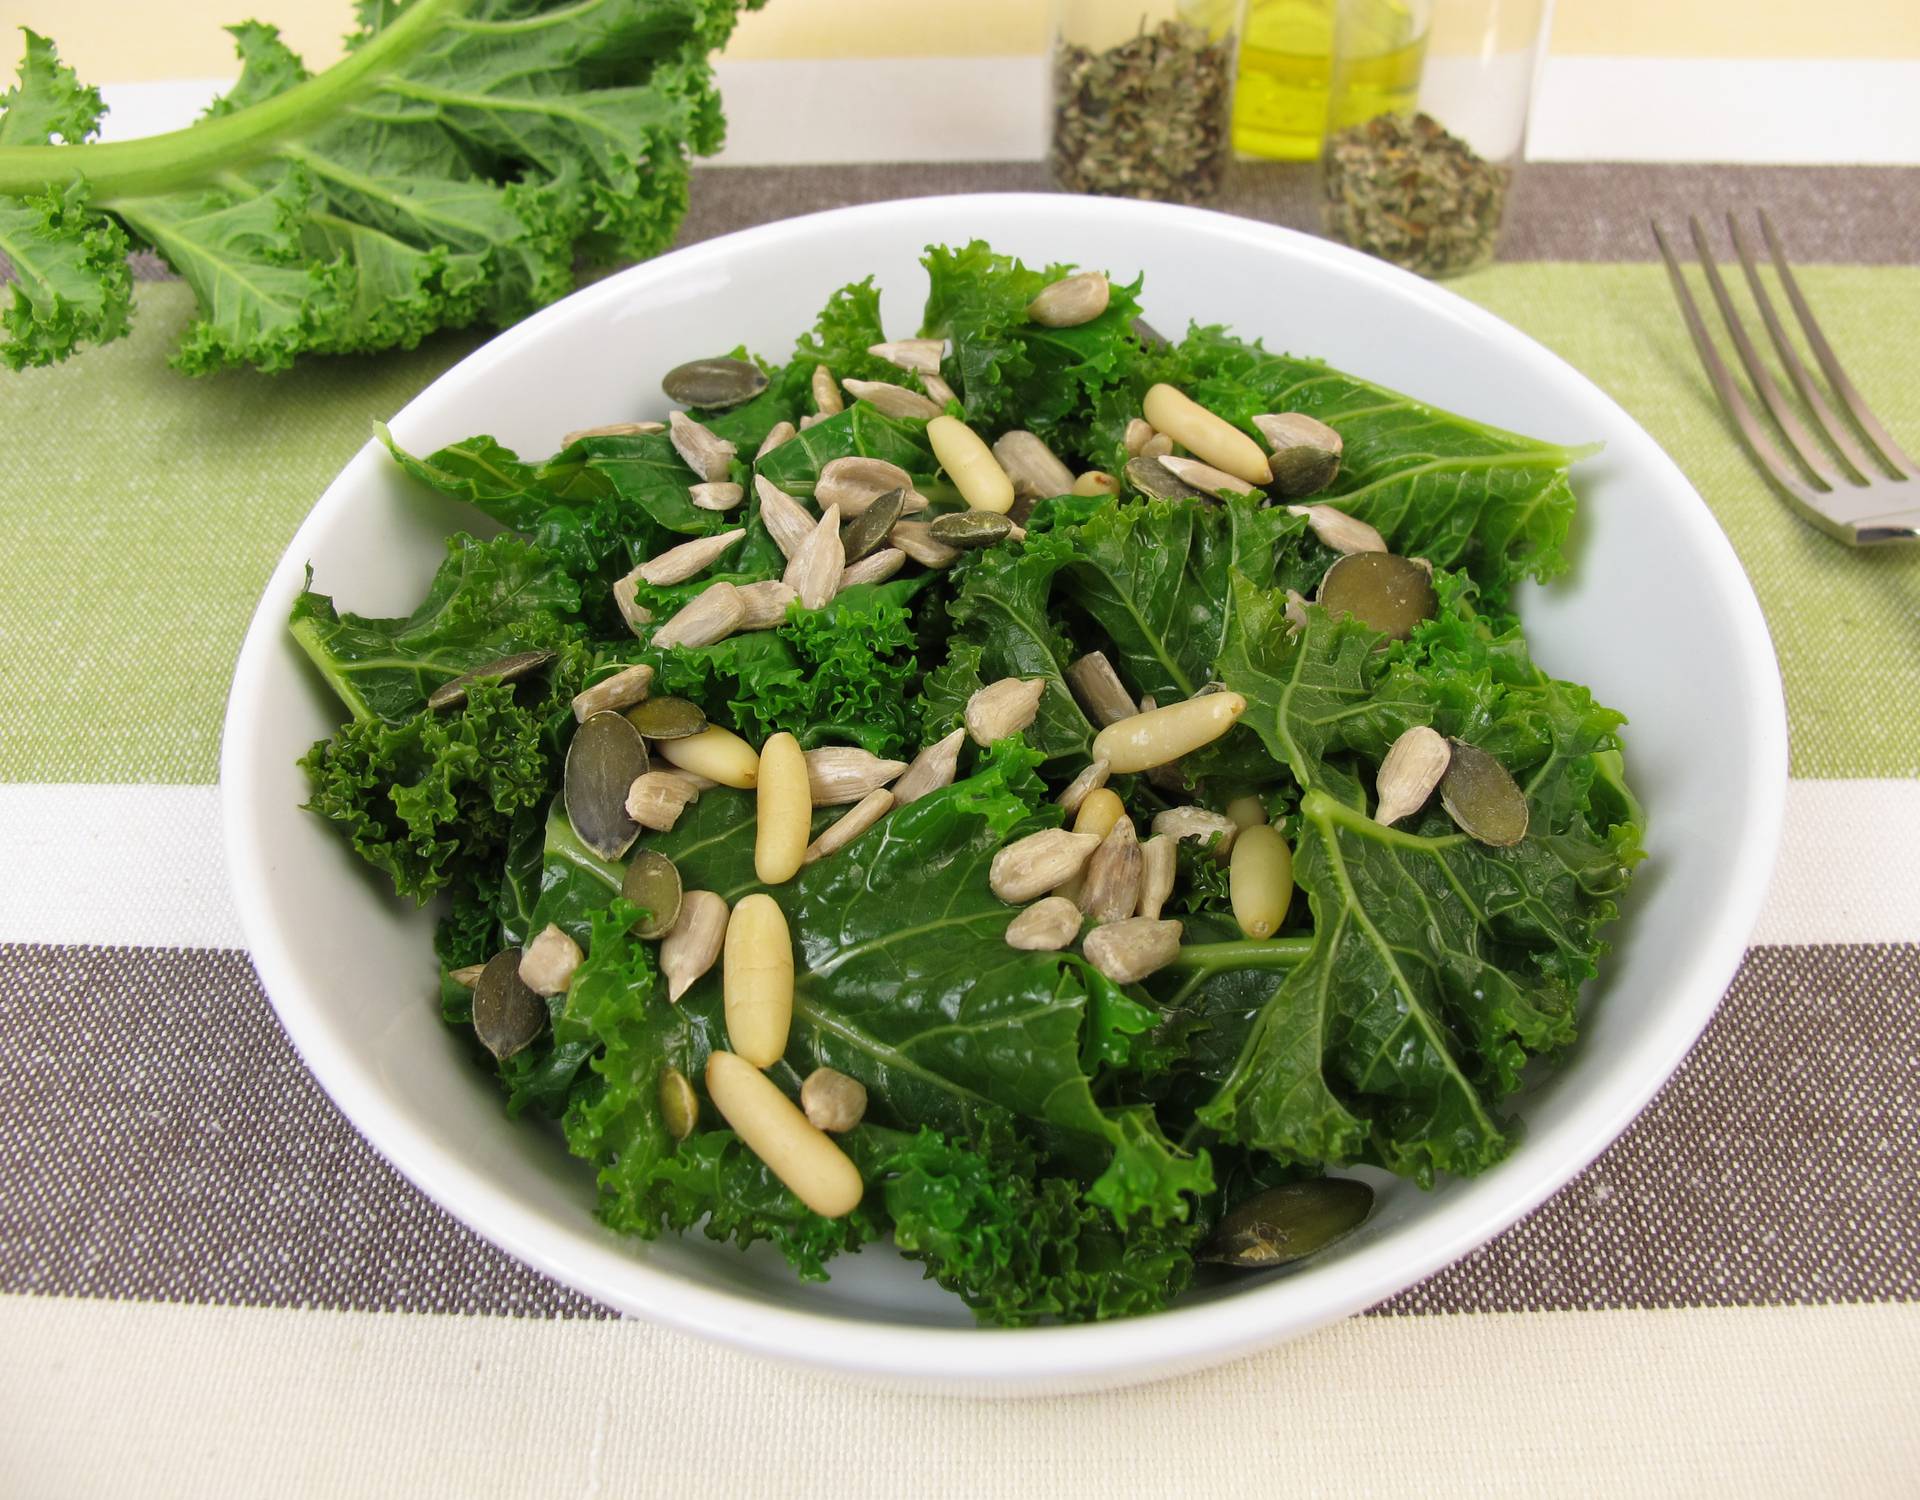 Kale salad with sunflower seeds, pine nuts, pumpkin seeds